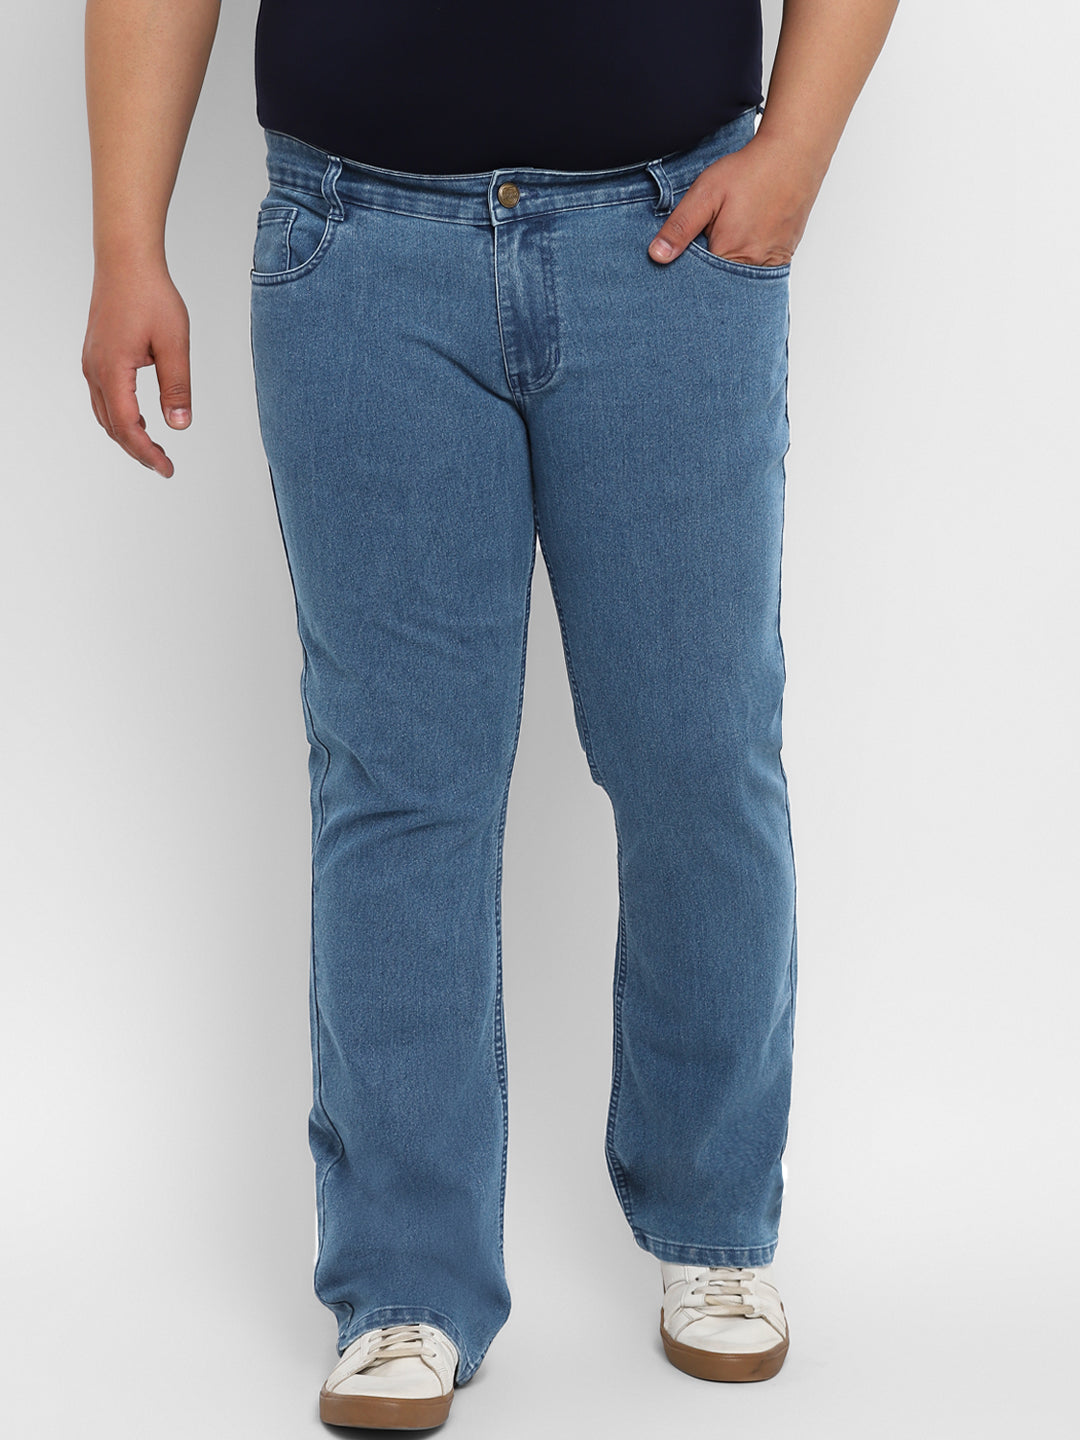 Urbano Plus Men's Light Blue Regular Fit Washed Denim Bootcut Jeans Stretchable